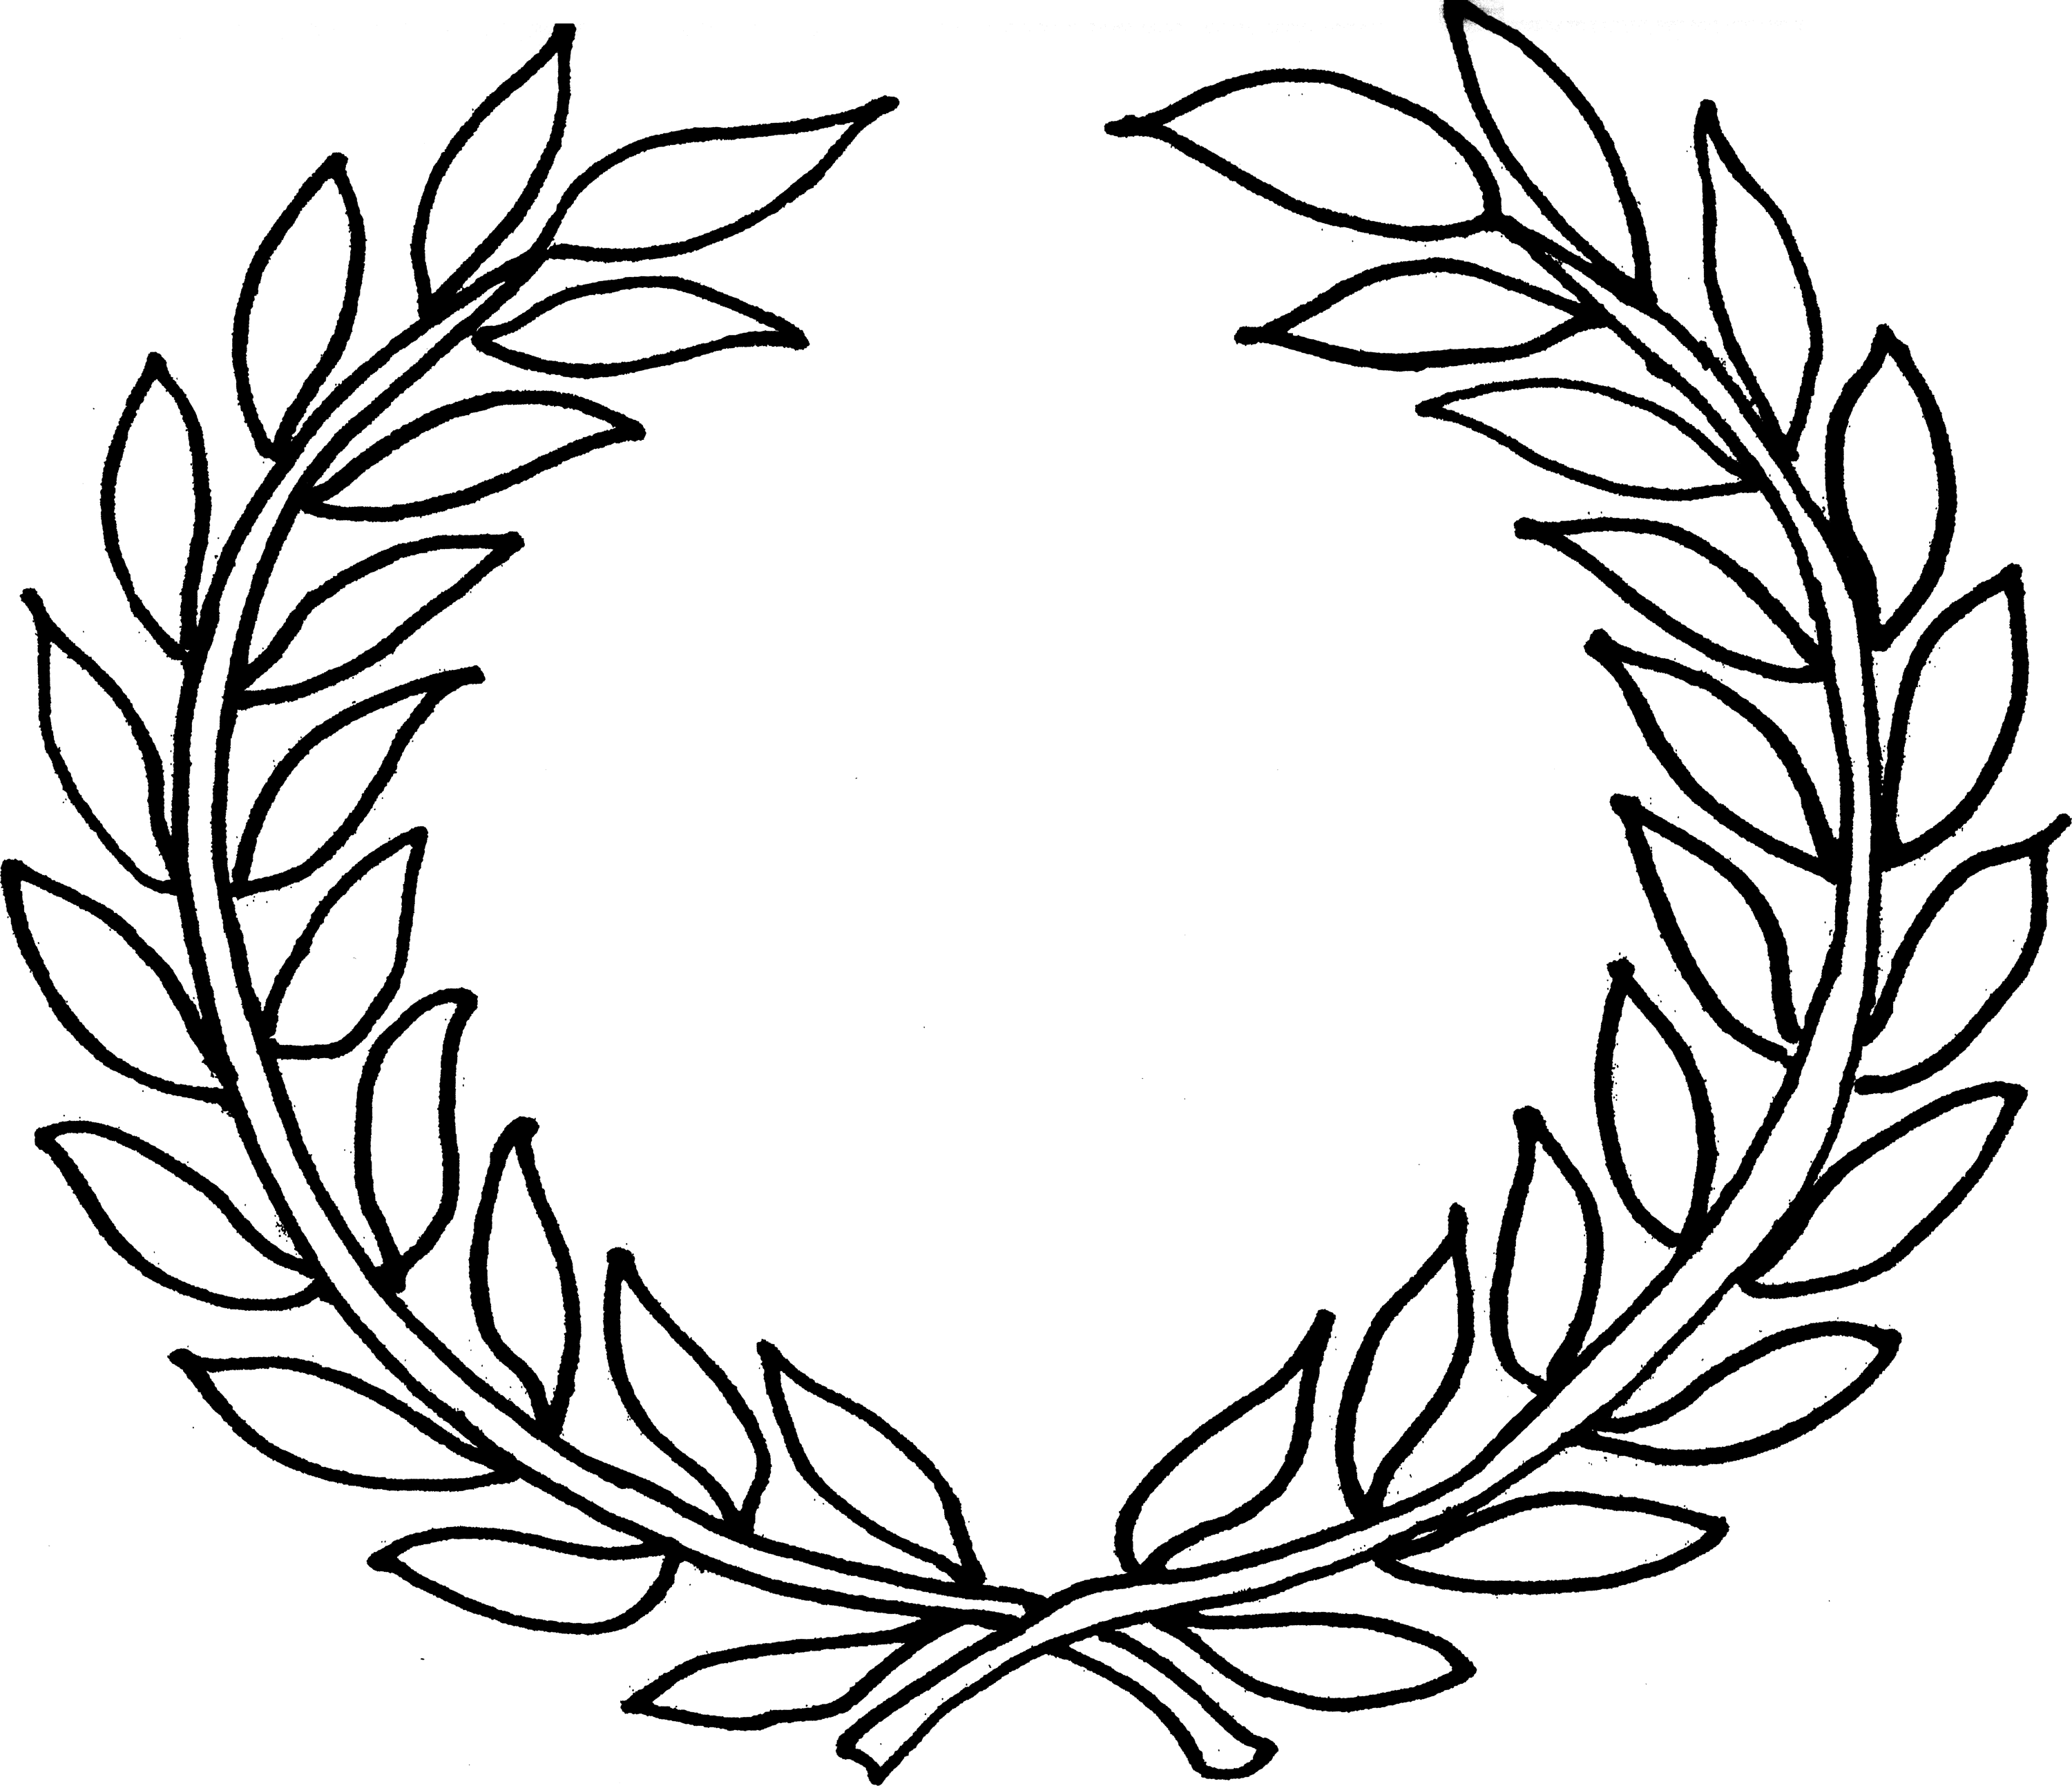 Clip Arts Related To : julius caesar leaf crown. 